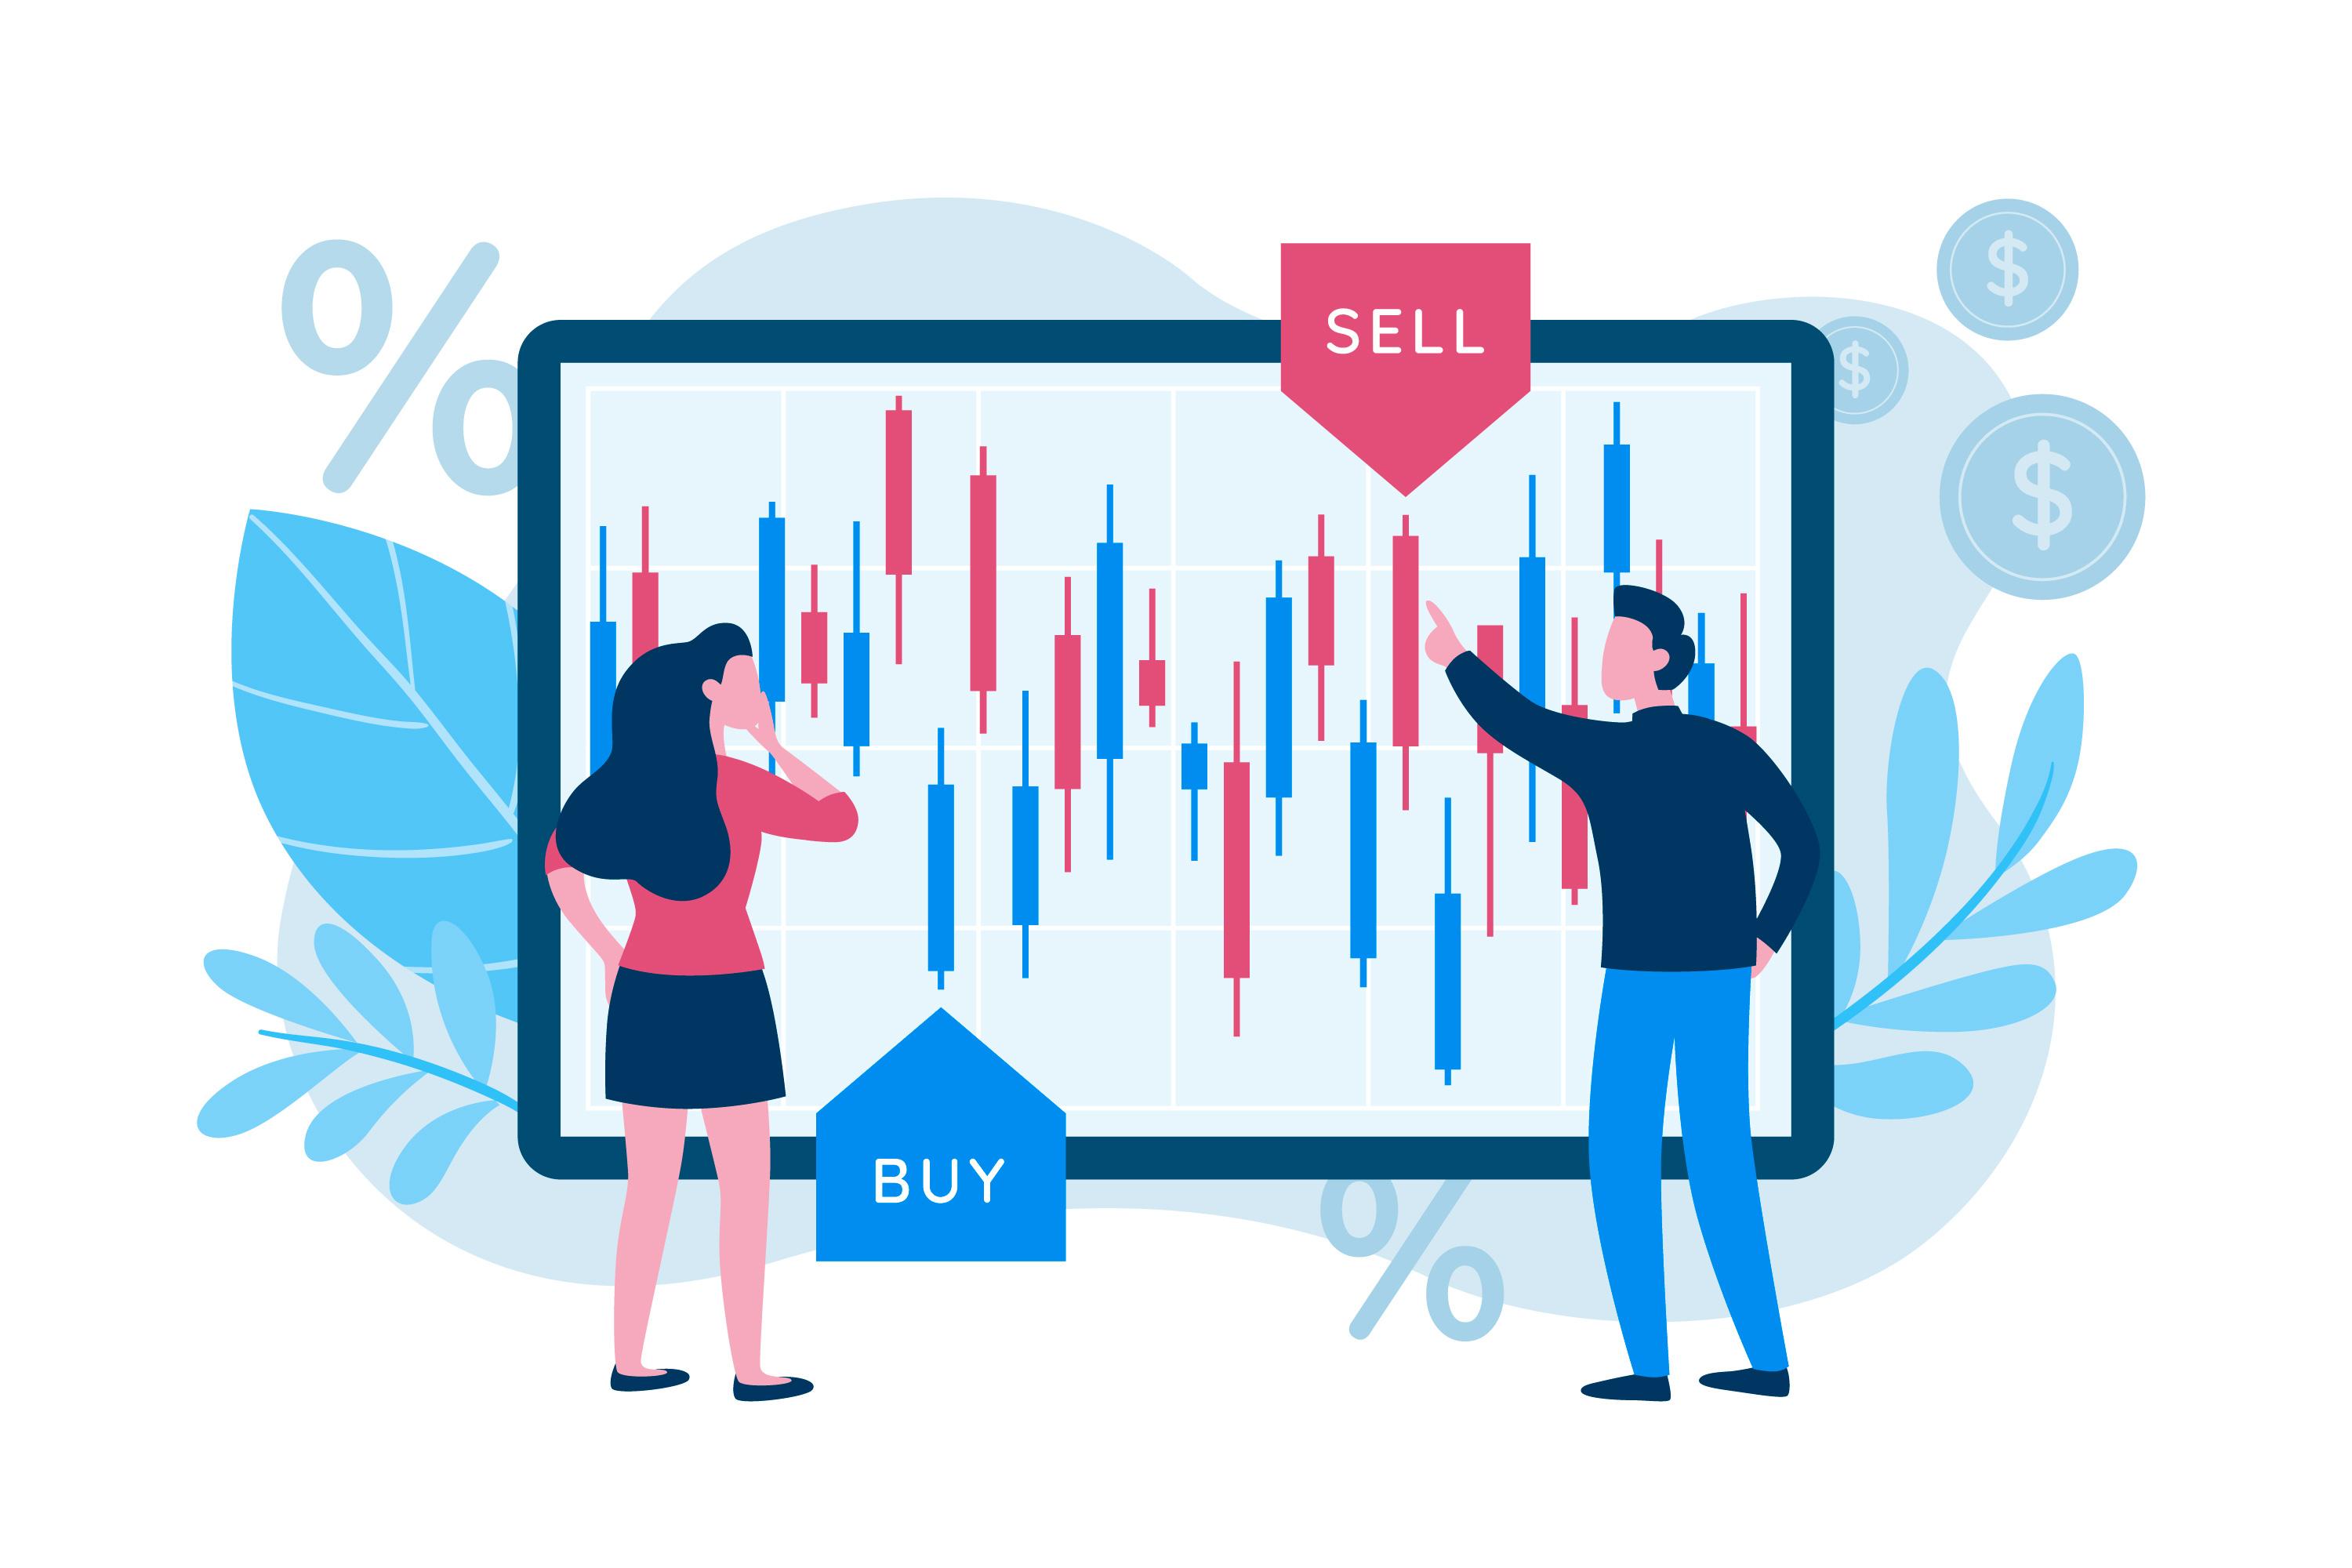 Technical tools of the TradingView platform: more tools, more profit